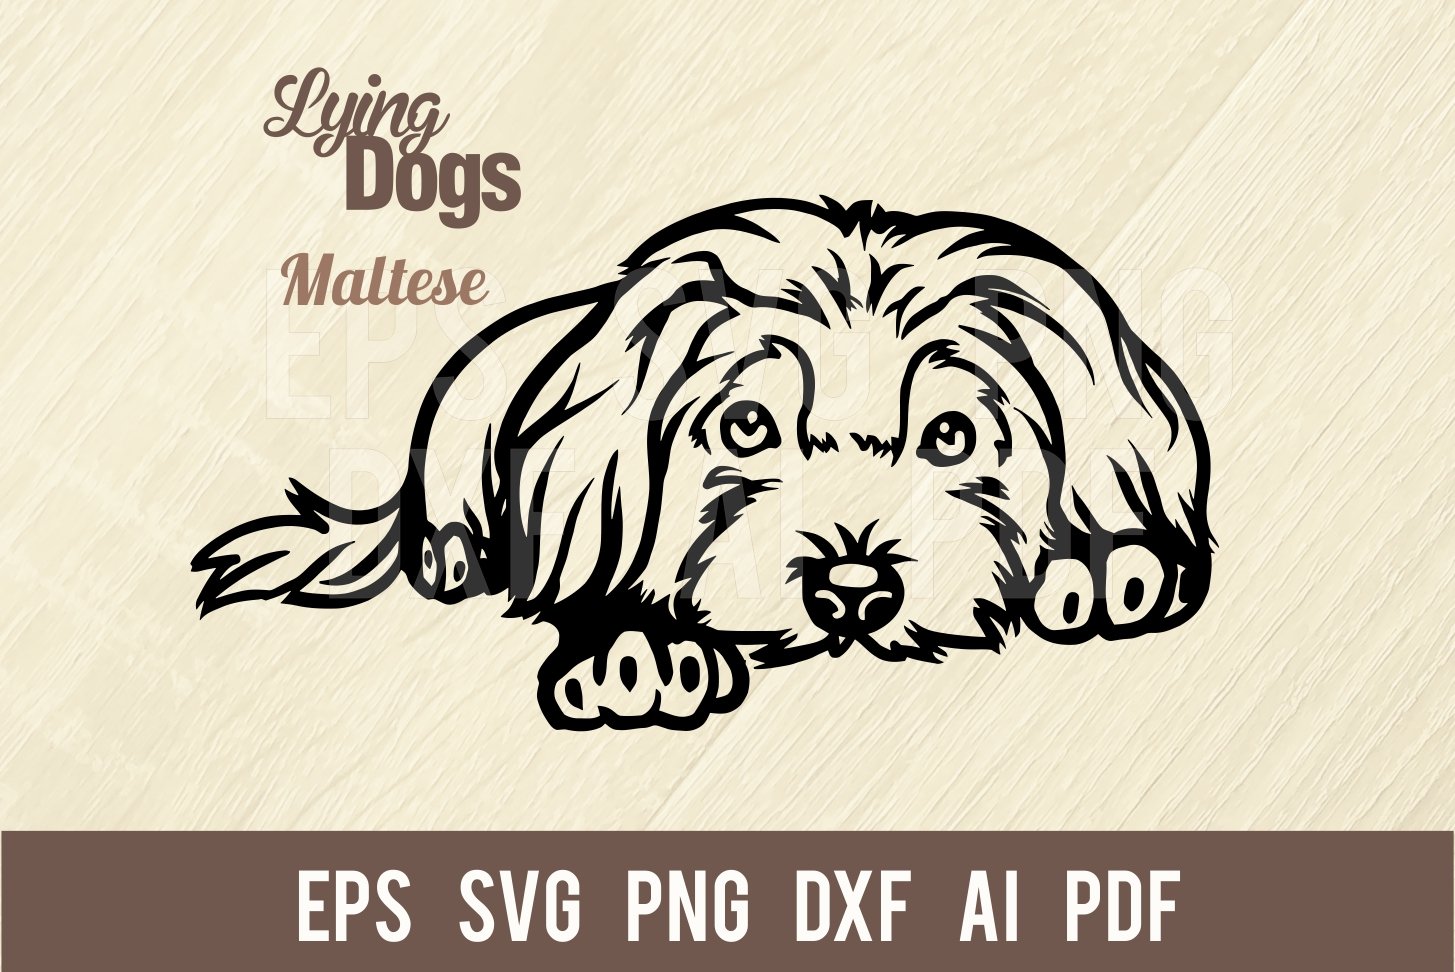 Maltese - Lying Dog Cut SVG Stencil cover image.